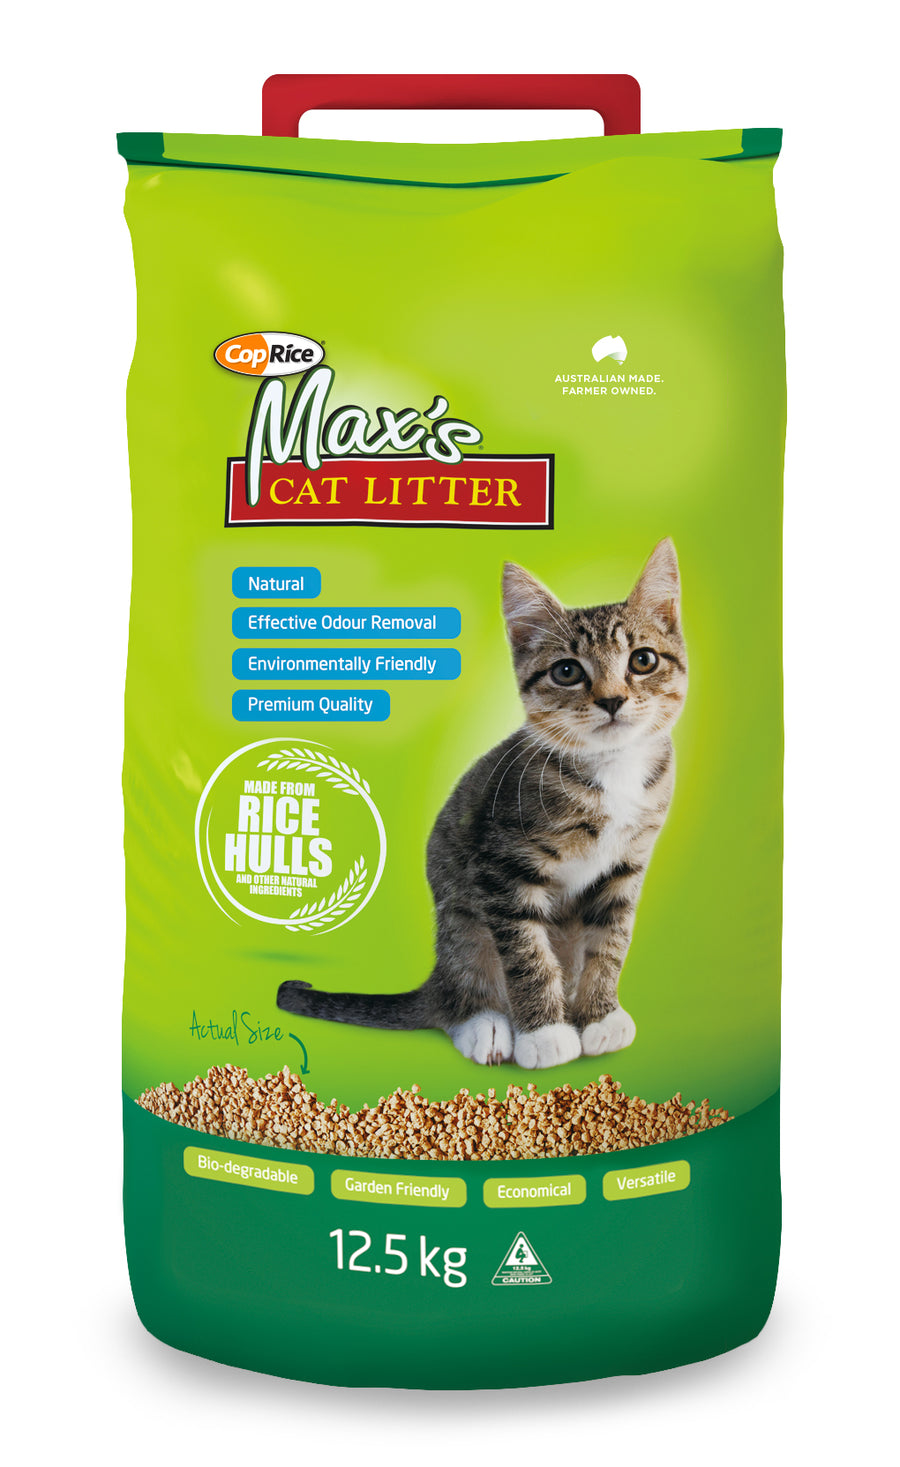 CopRice Max's Cat Litter 12.5kg